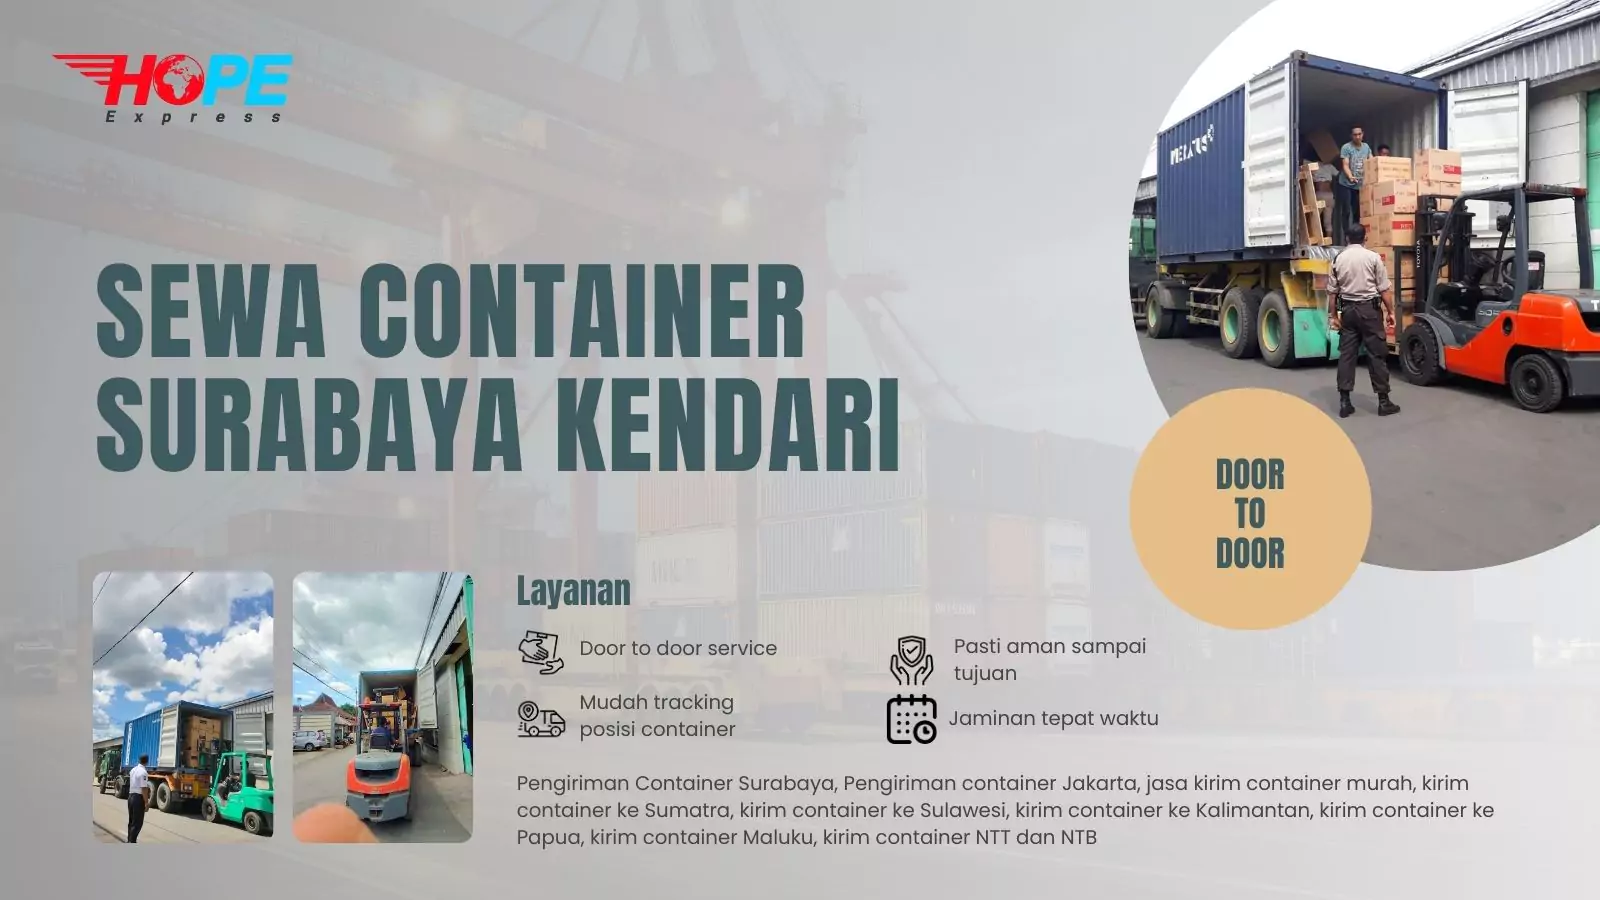 Sewa Container Surabaya Kendari